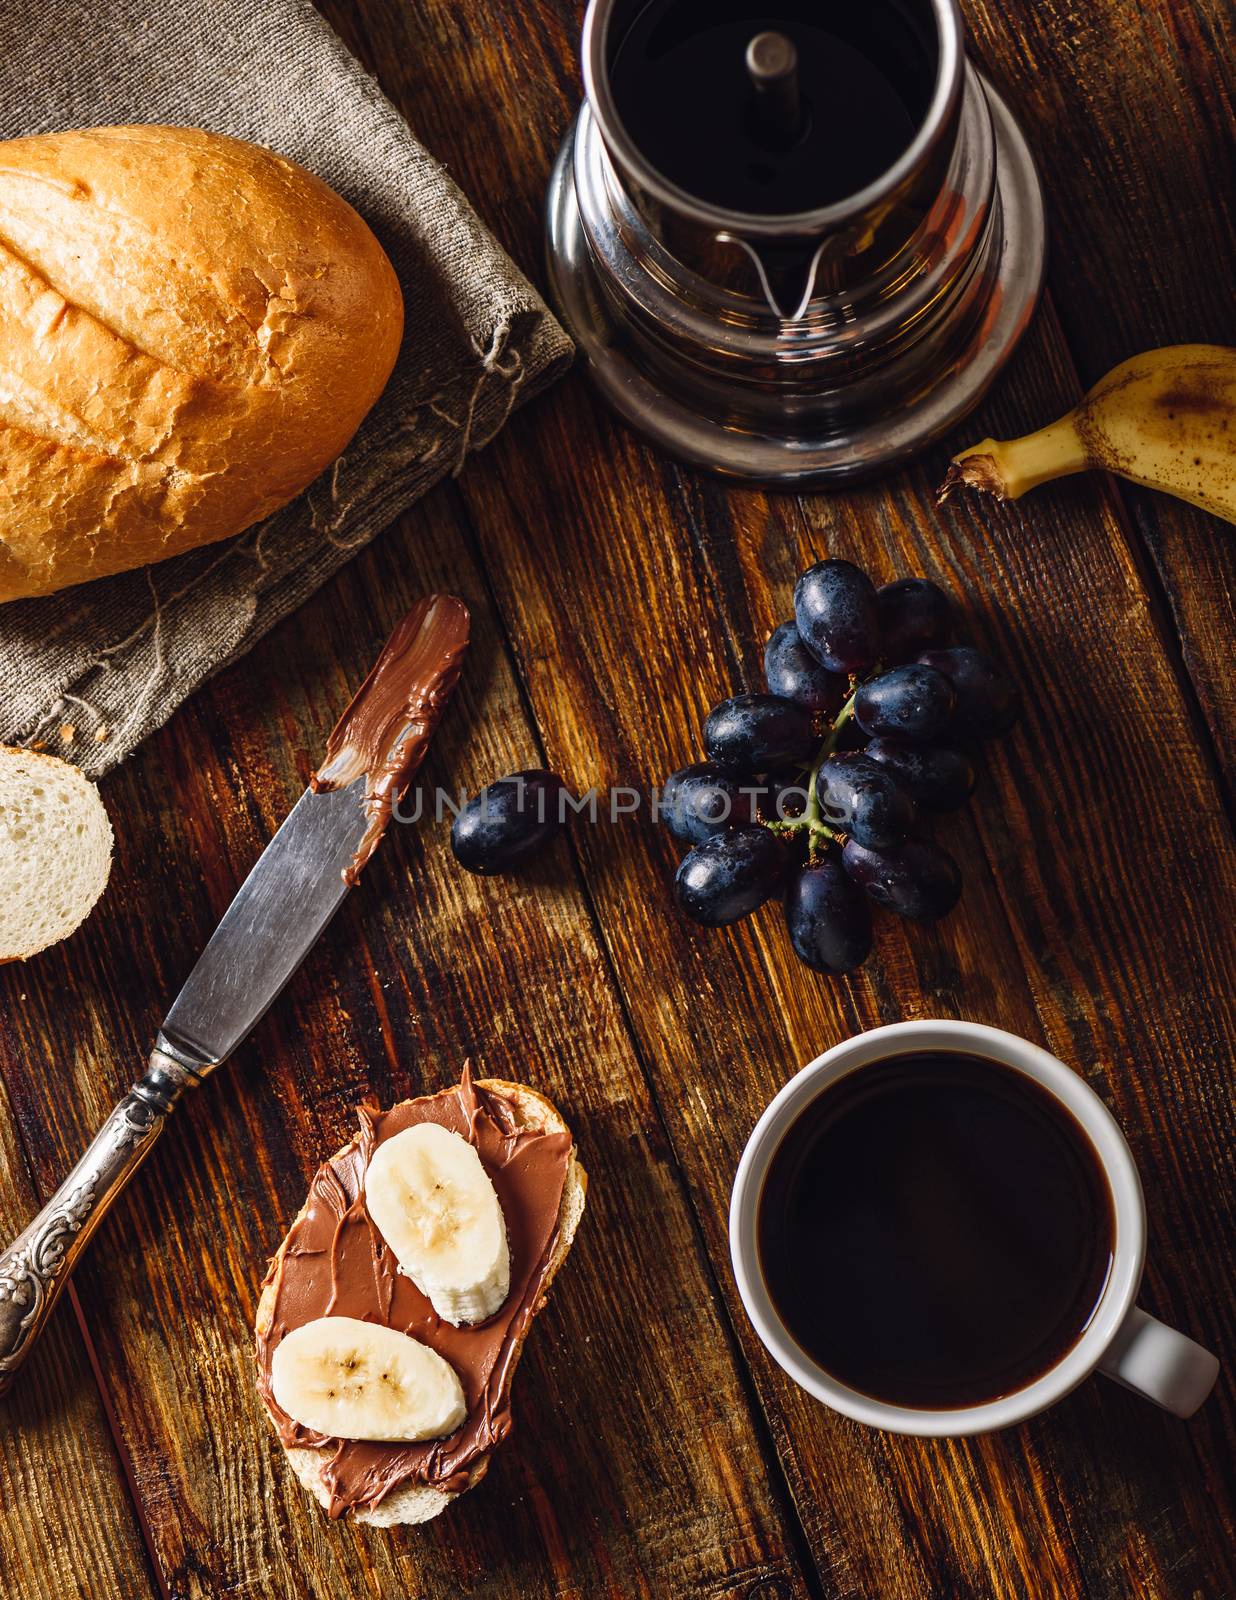 Breakfast with Fruit Sandwich and Coffee. by Seva_blsv